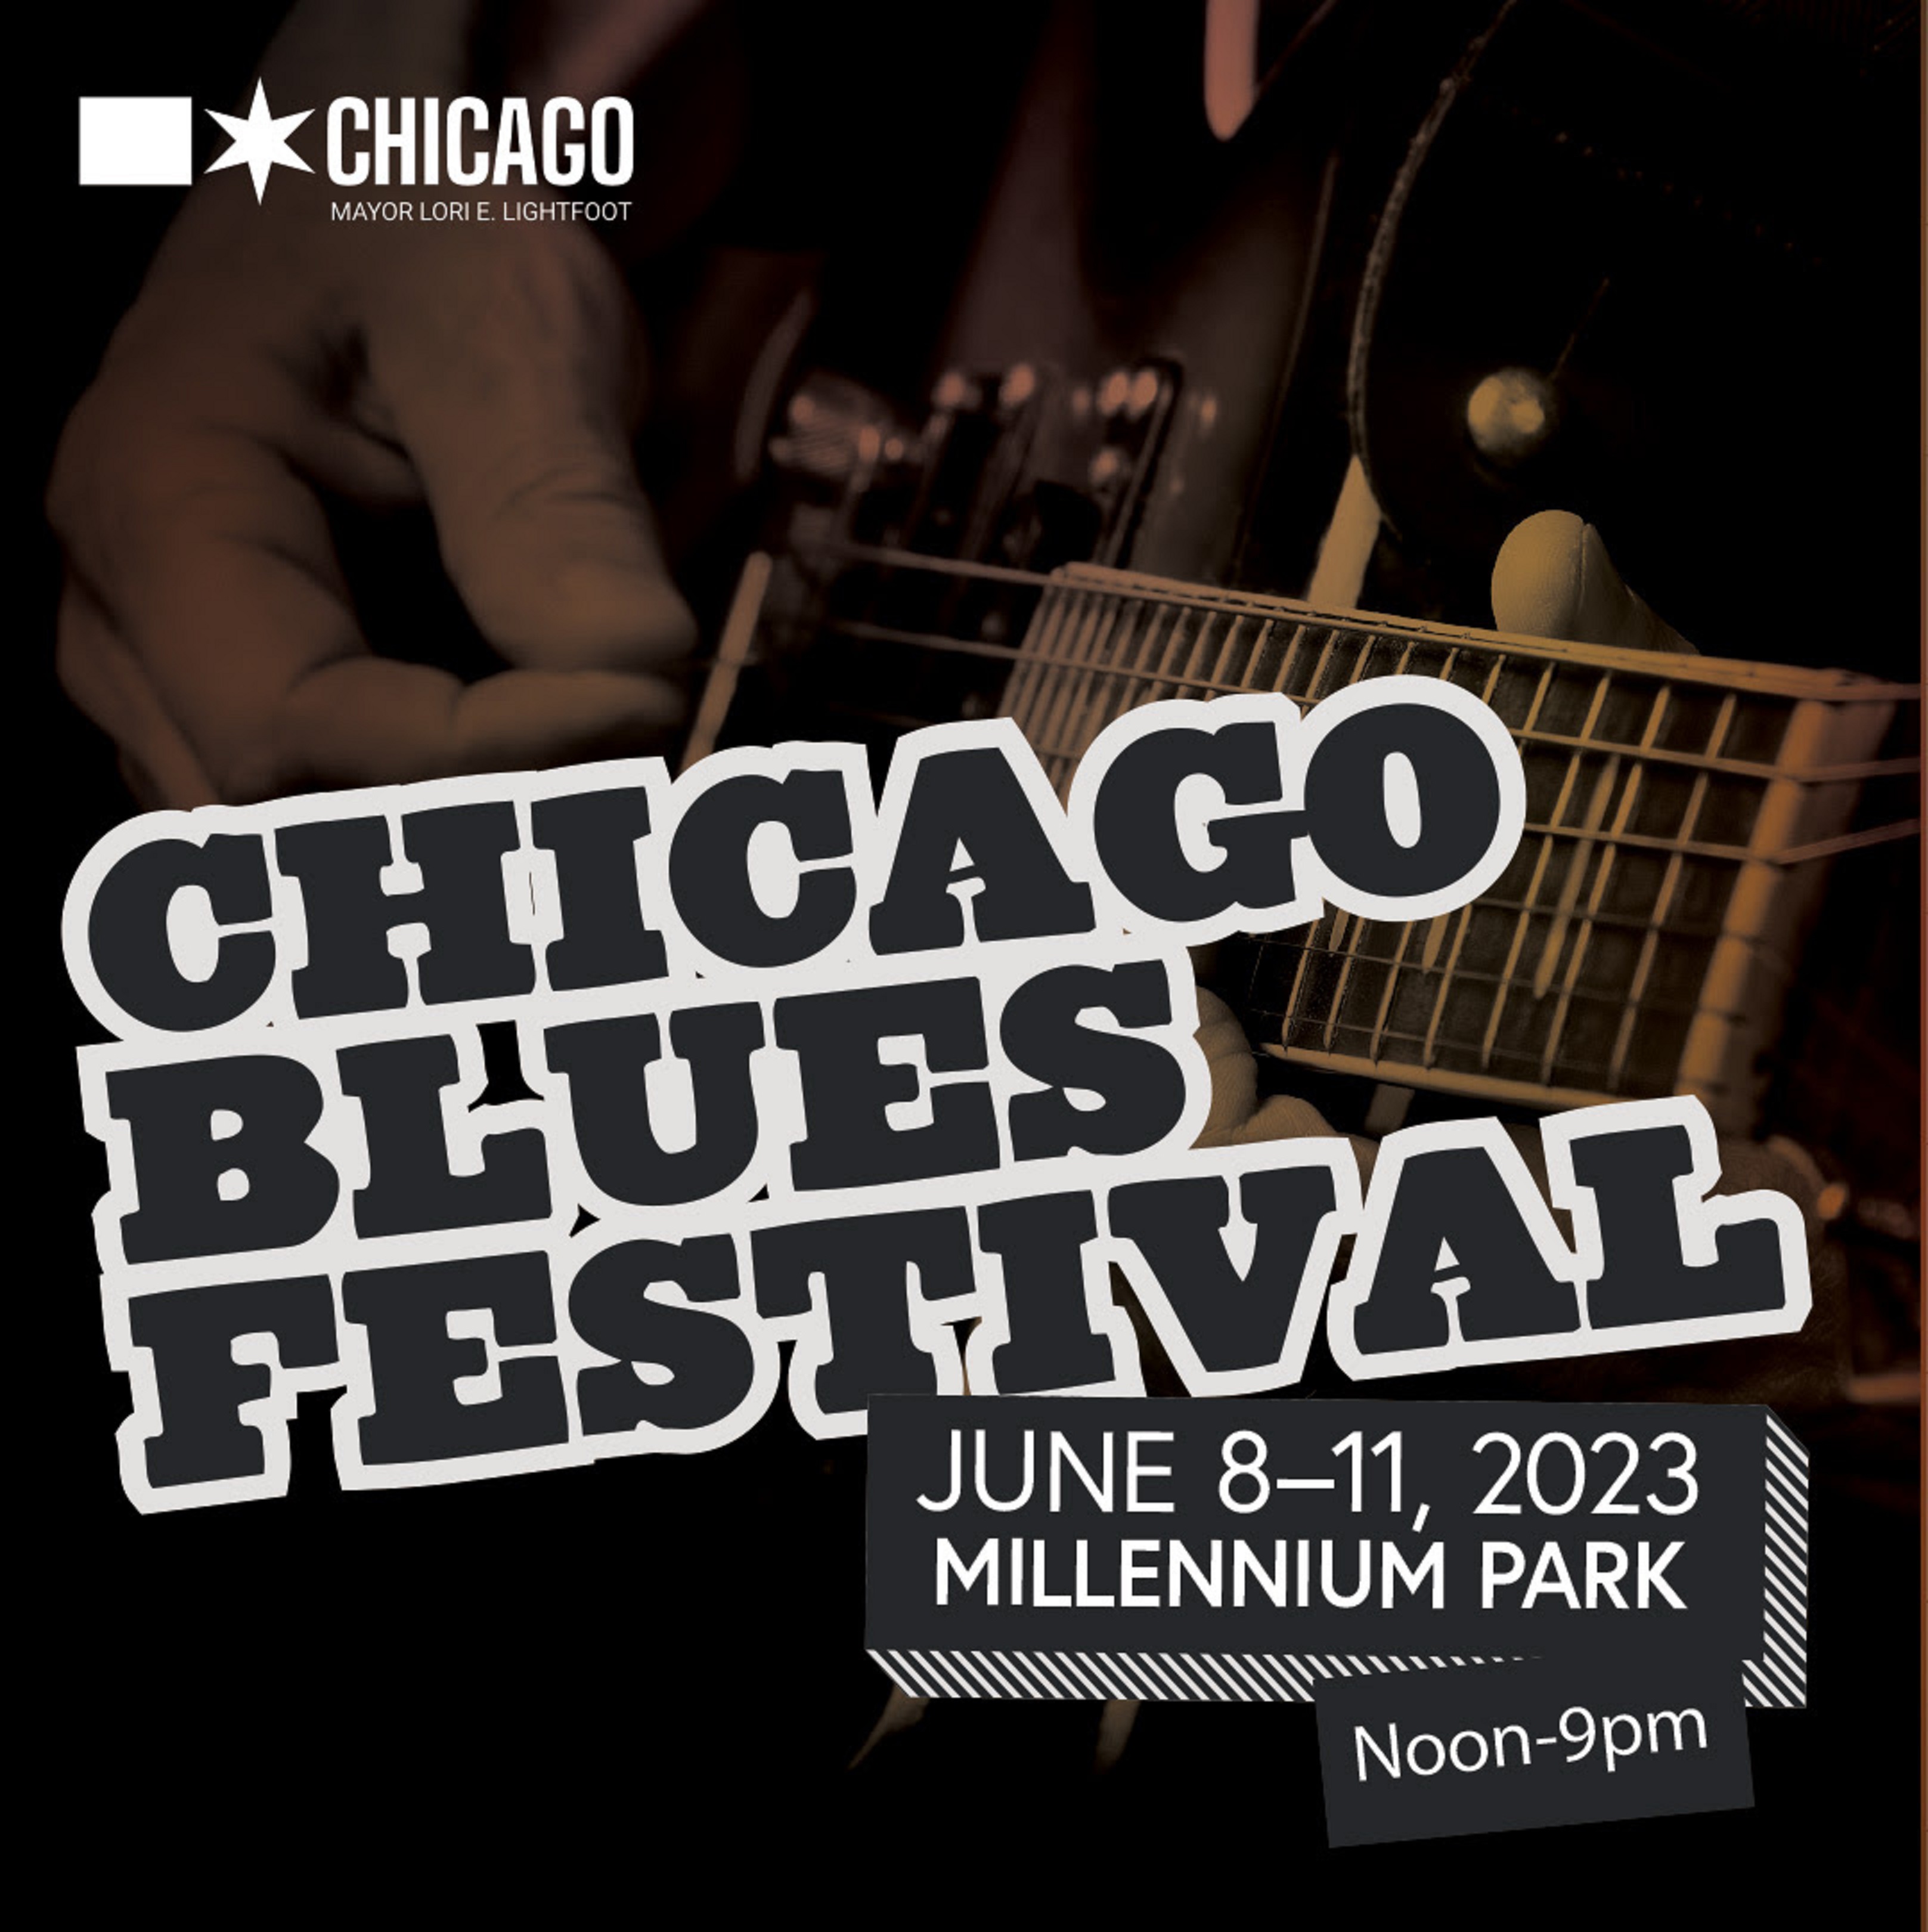 City Of Chicago Announces Line Up For 2023 Chicago Blues Festival June 8-11